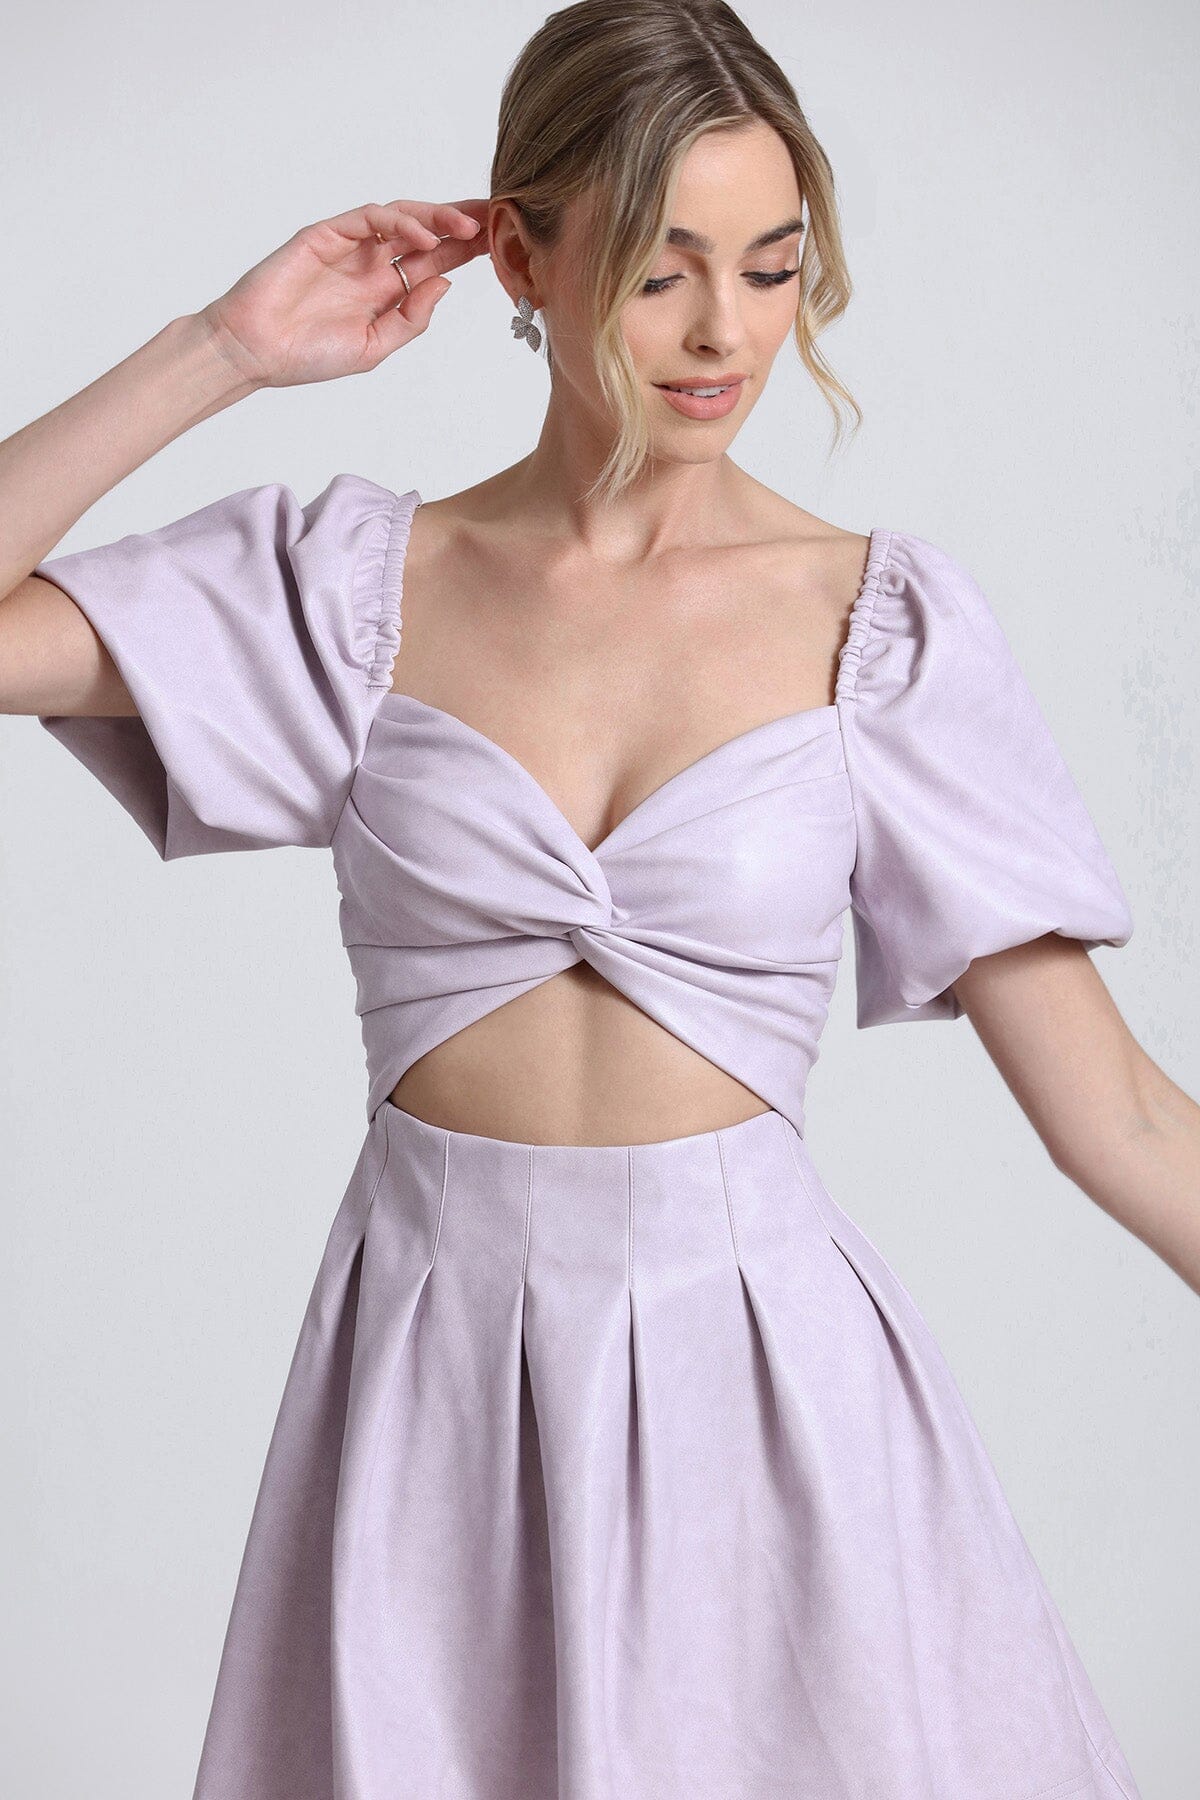 sleeve short gown - Google Search | Fashion dresses, Cute dresses, Pretty  dresses